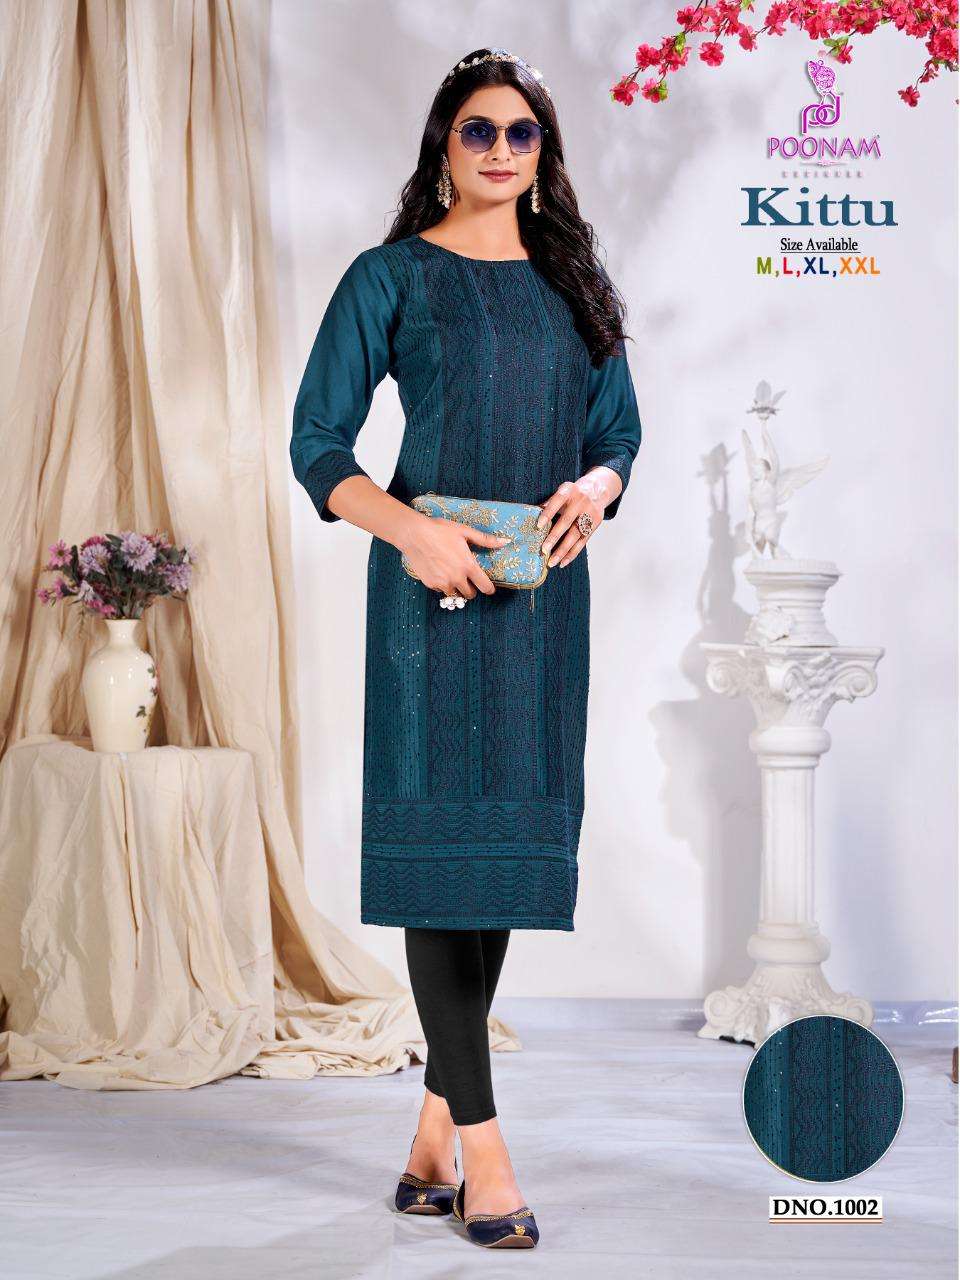 poonam designer kittu 1001-1004 series trendy designer kurtis wholesale price surat 